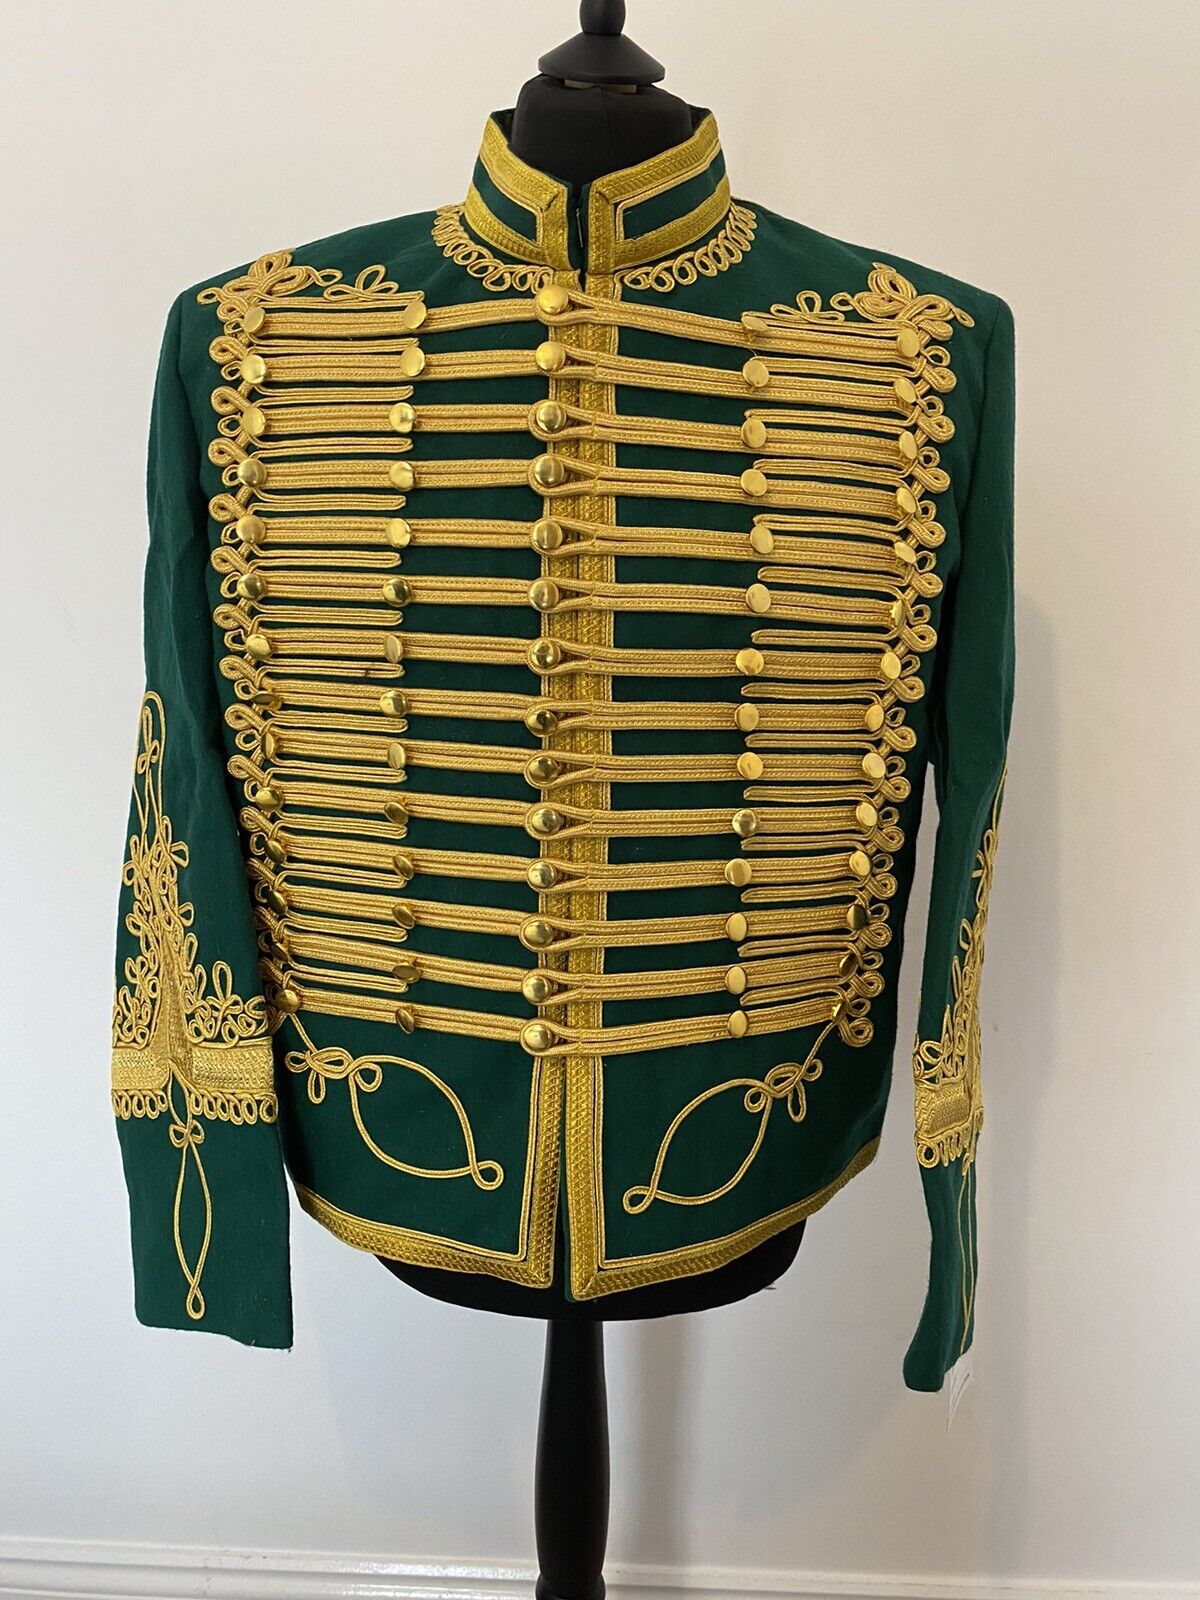 Napoleonic Military Style Tunic pelisse Jimmie Hendrix Uniform Hussar Jacket